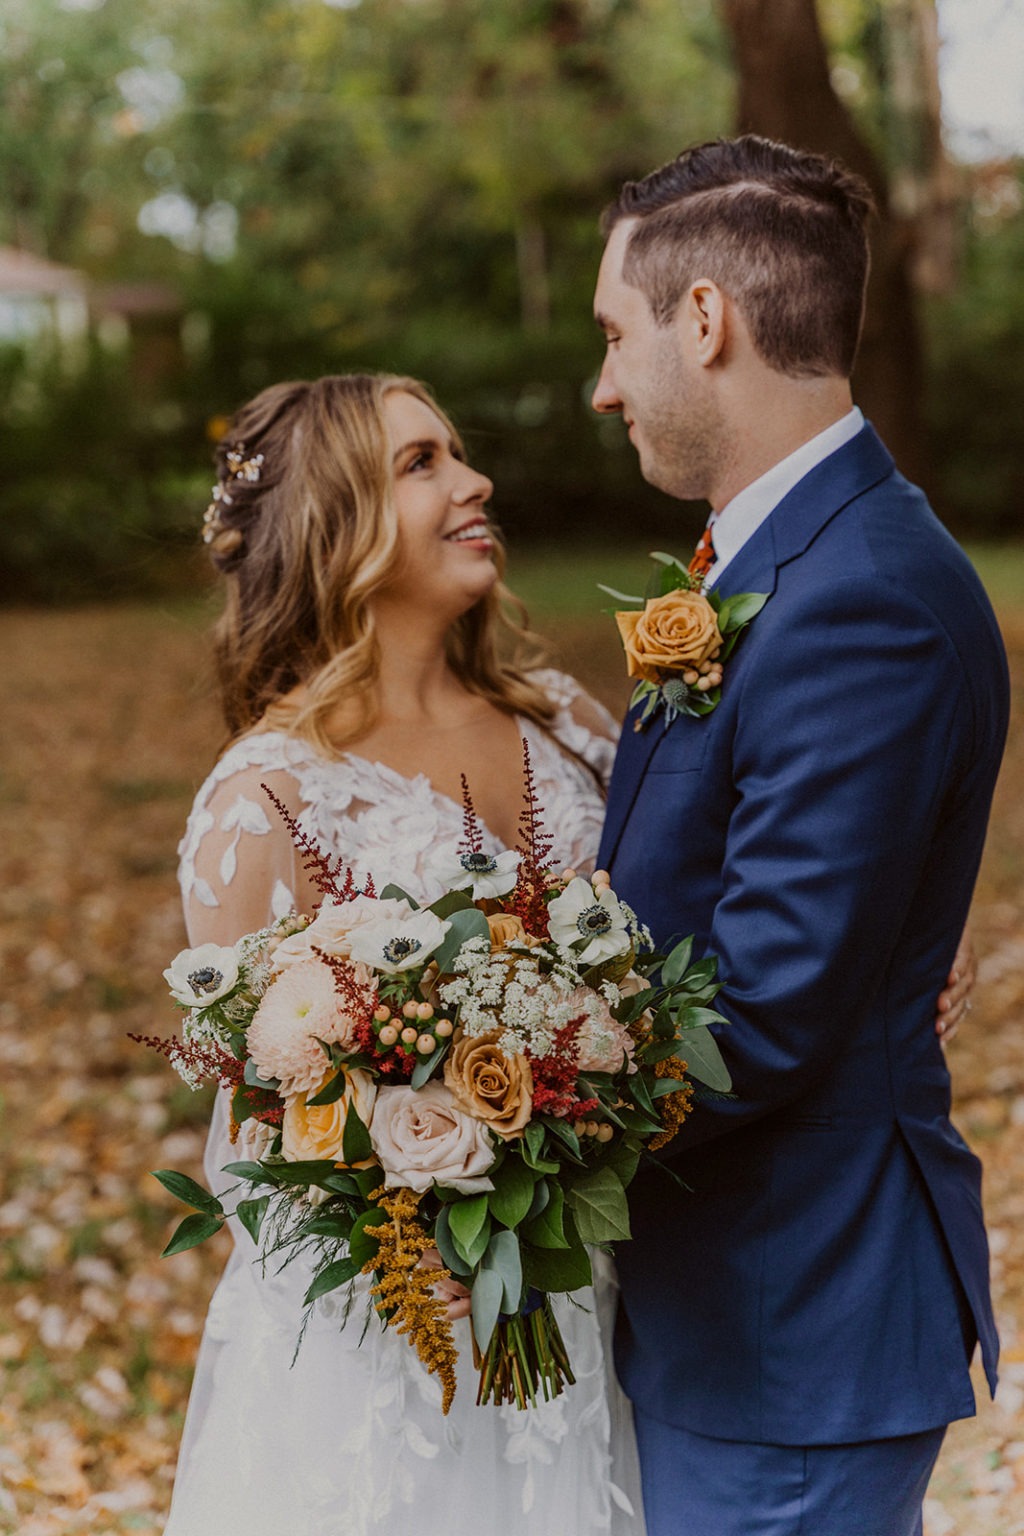 How to Have a Backyard Wedding: Virginia Wedding Inspiration